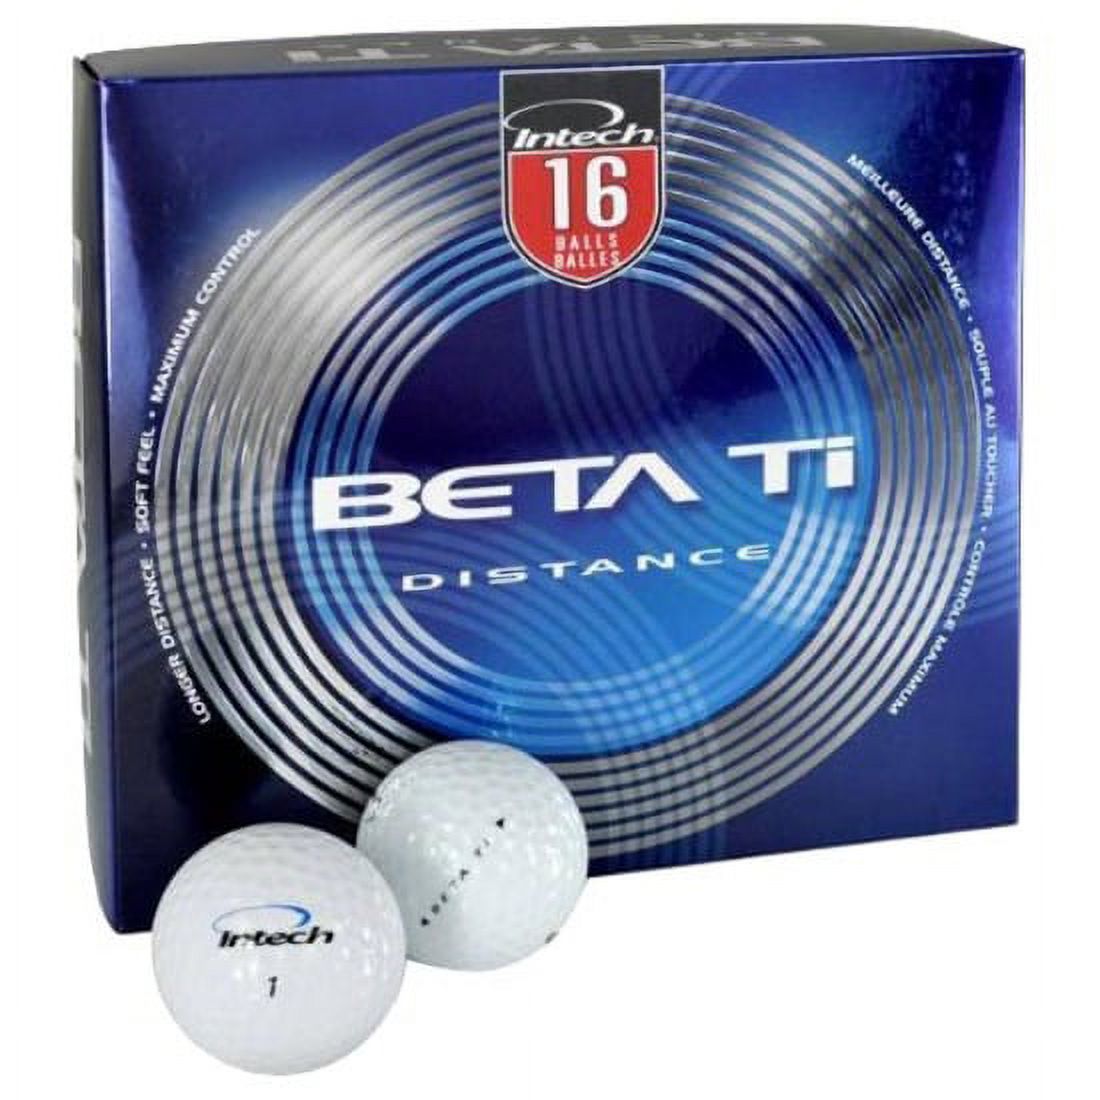 Intech Beta Ti Golf Balls, 16 Pack - image 1 of 6